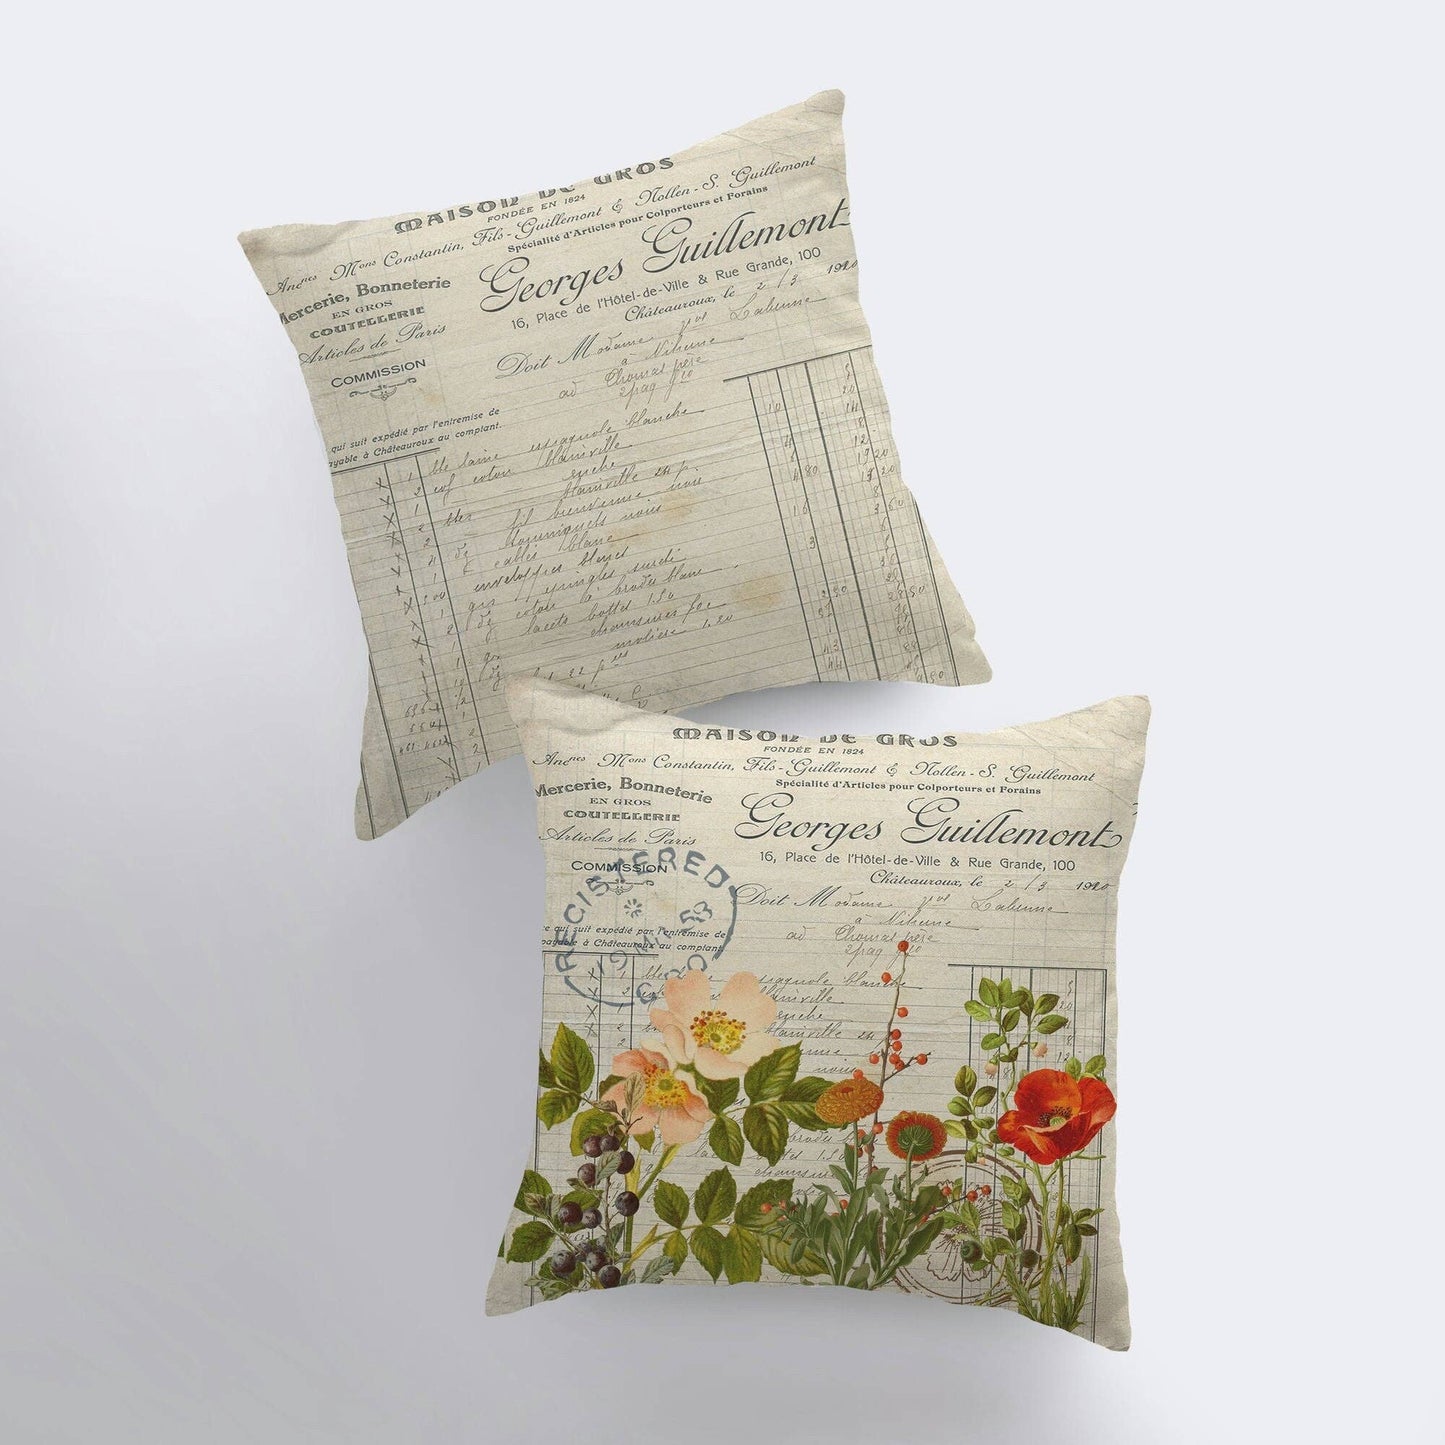 Botanical Garden | Vintage Floral | Botanical | Pillow Cover | Vintage | Farmhouse Decor | Home Decor | Throw Pillow | Room Decor | Gift: 14x14 Inches / Cover Only